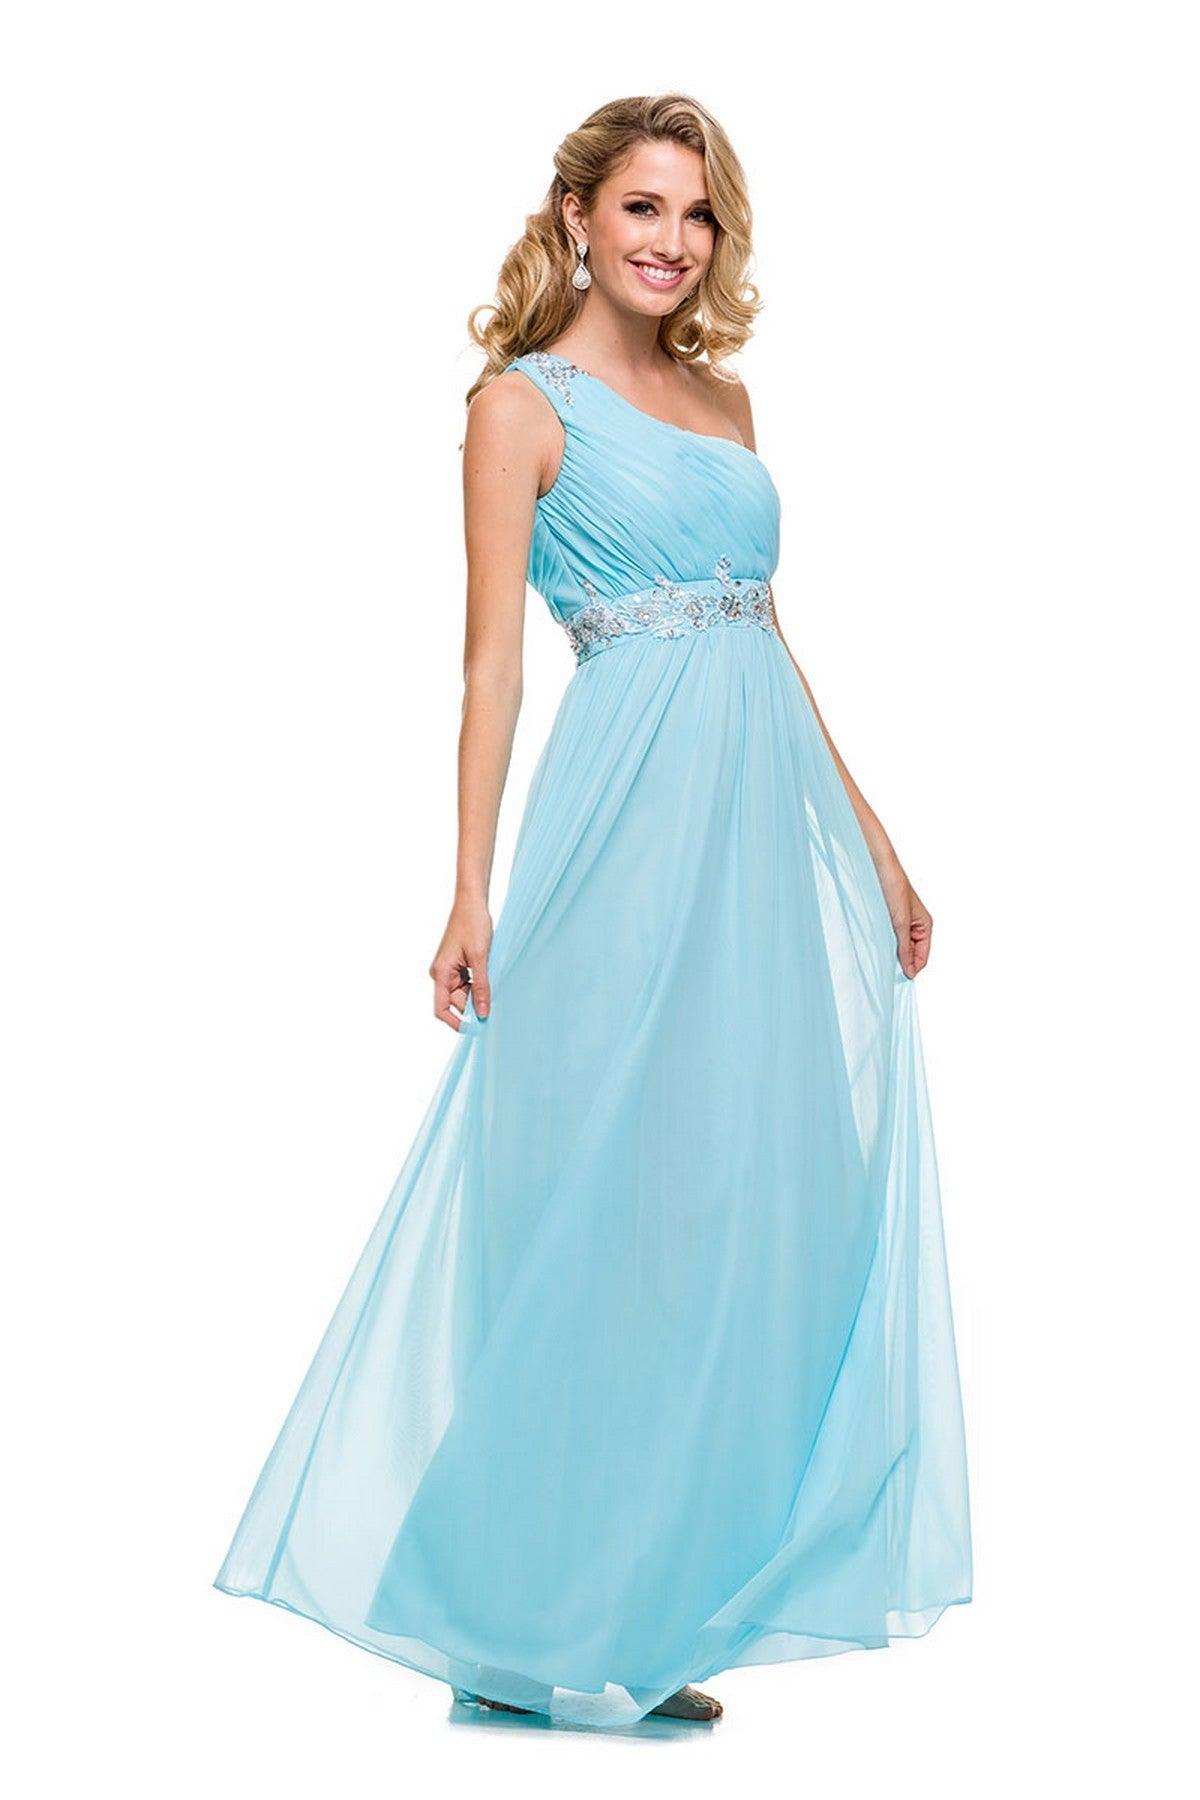 Nox Anabel 2688 Long One Shoulder Formal Dress for $15.99 – The Dress ...